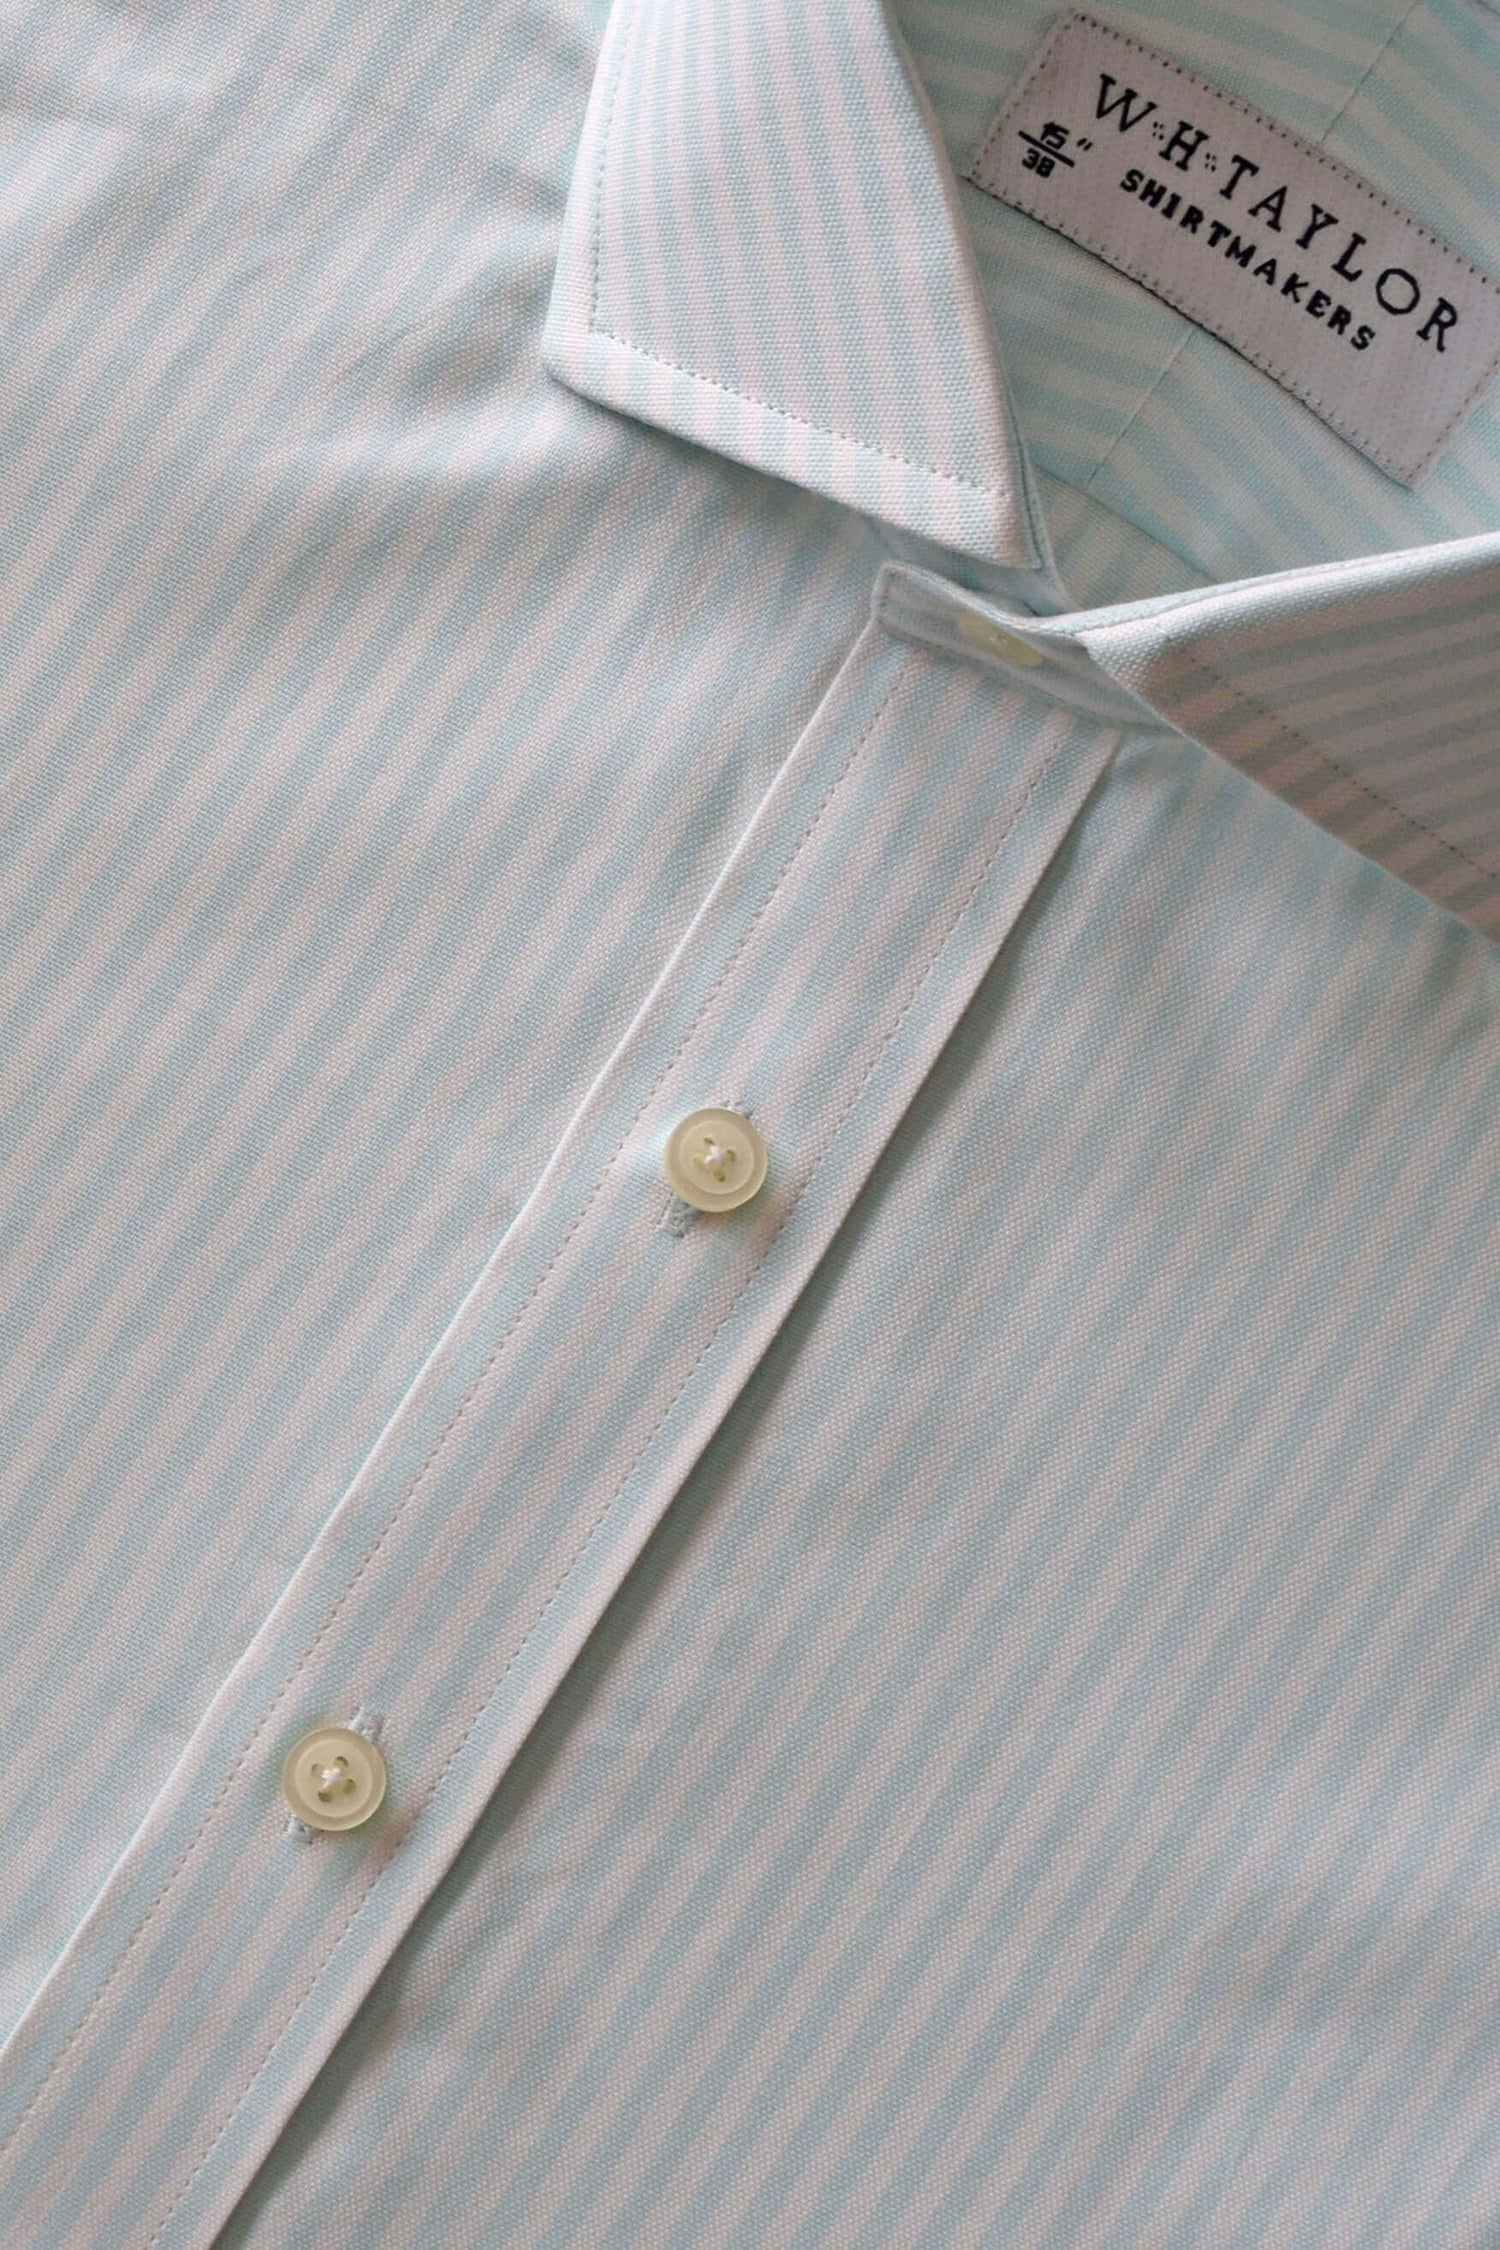 Mint Bengal Stripe Oxford Men's Bespoke Shirt - whtshirtmakers.com